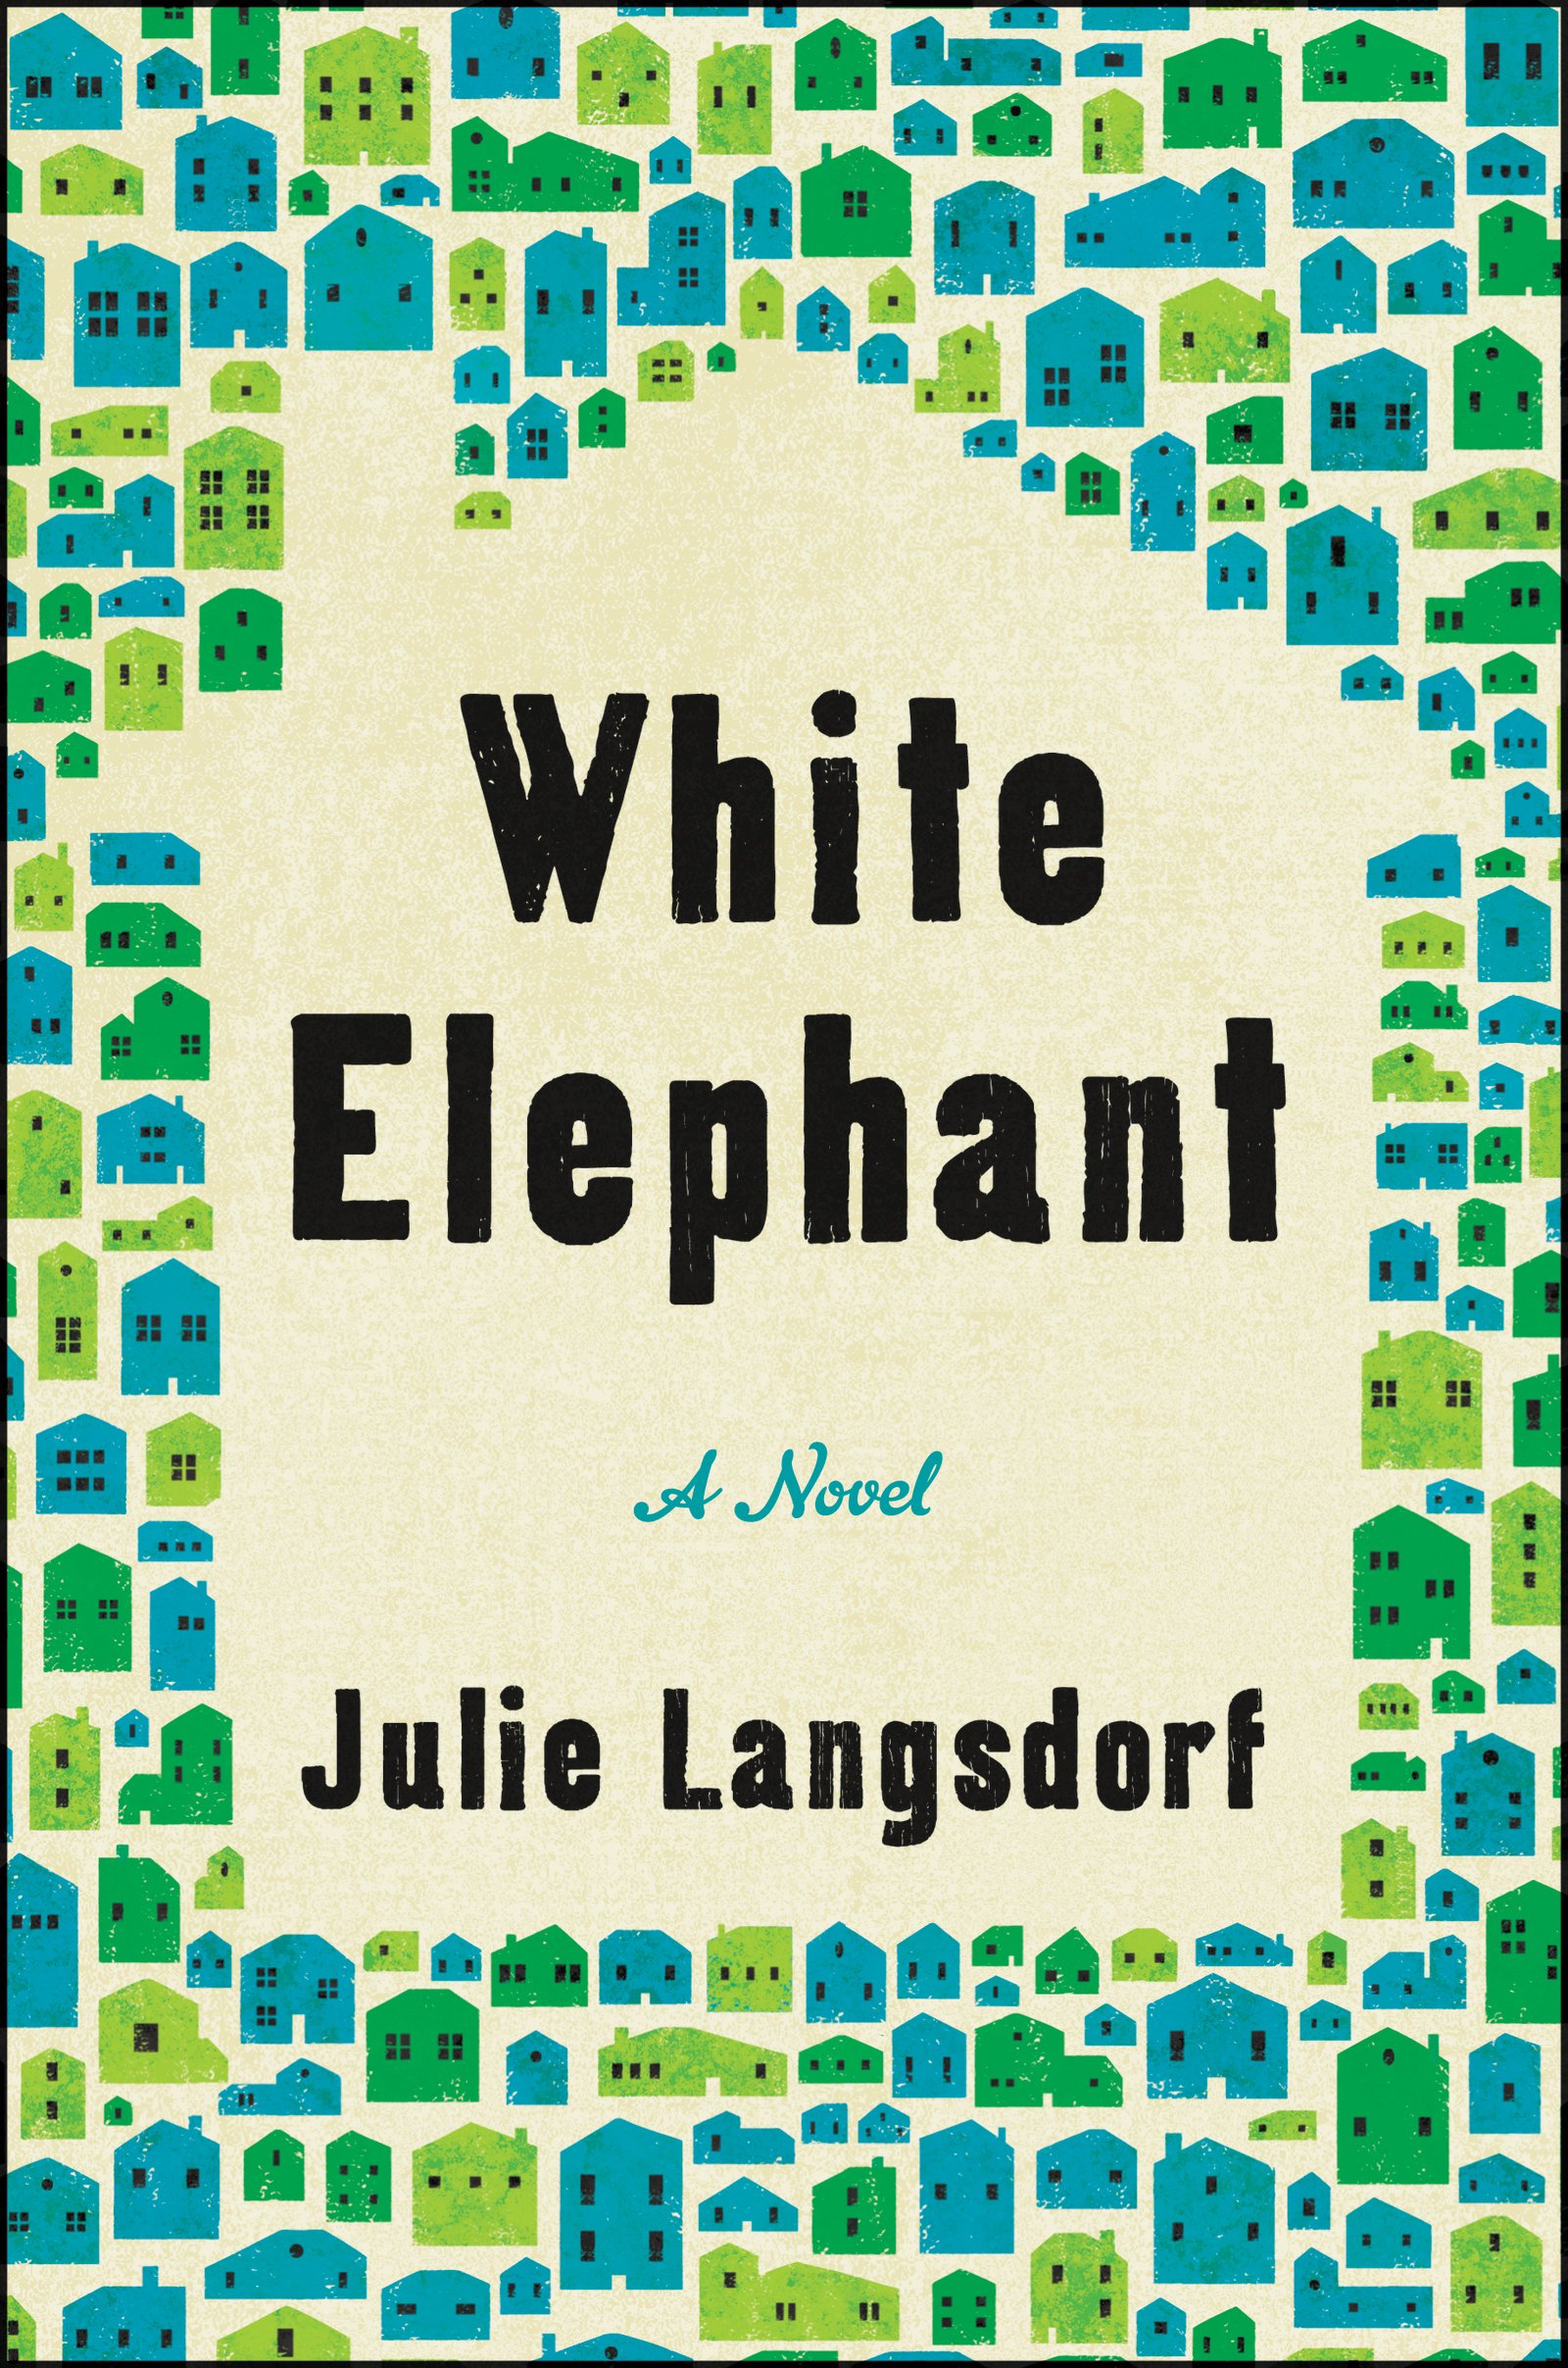 White Elephant: A Novel